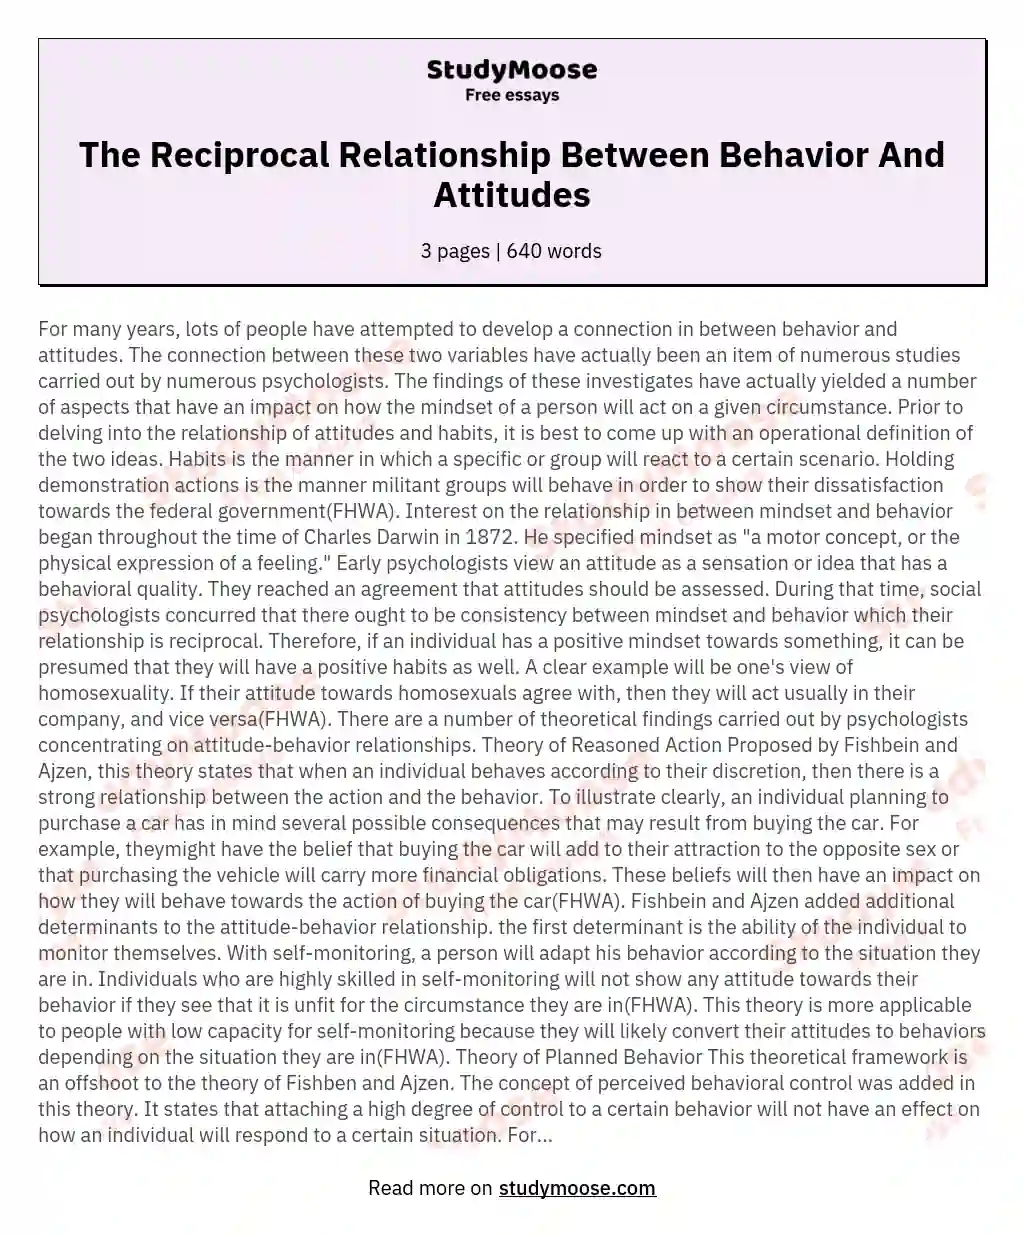 The Reciprocal Relationship Between Behavior And Attitudes essay